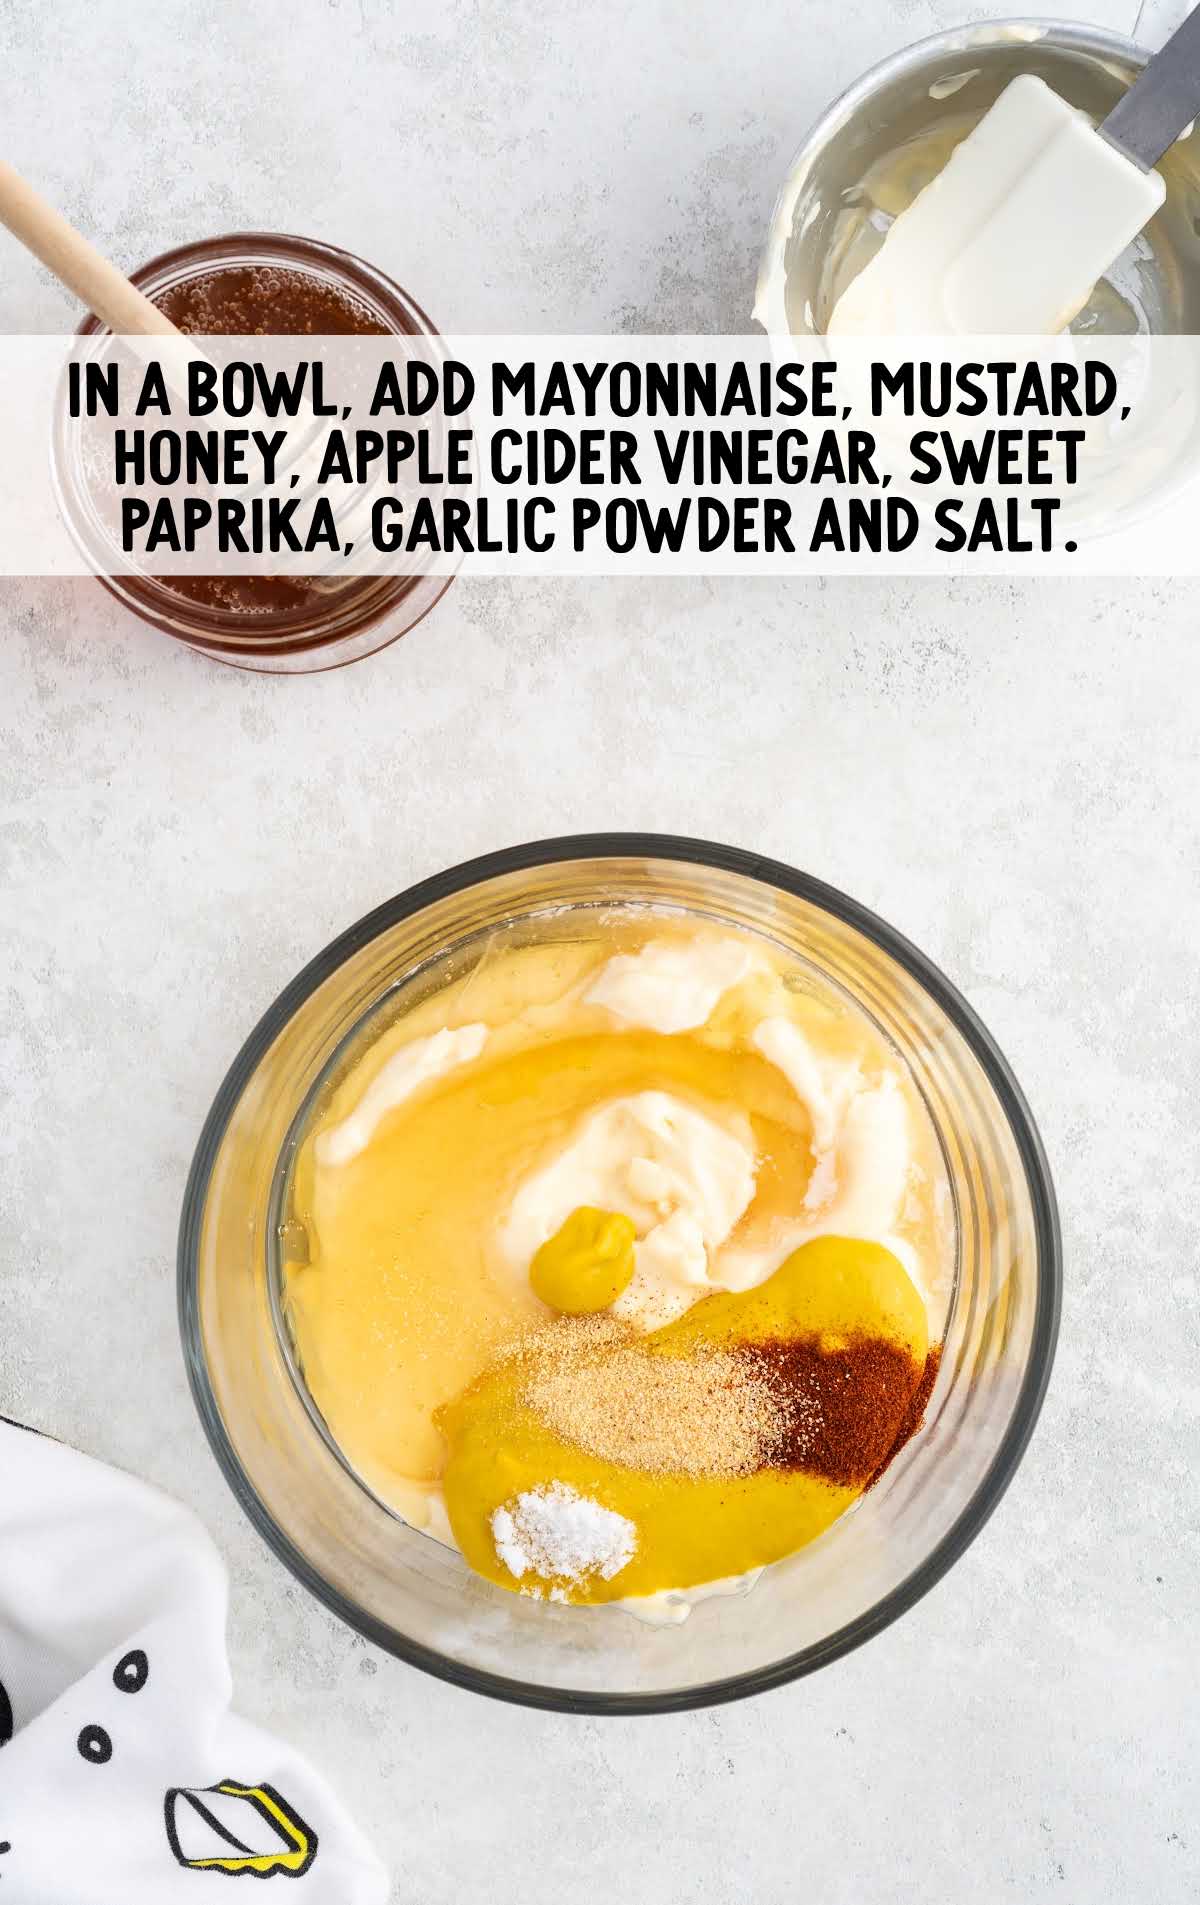 mayonnaise, mustard, honey, apple cider vinegar, sweet paprika, garlic powder, and salt folded in a bowl